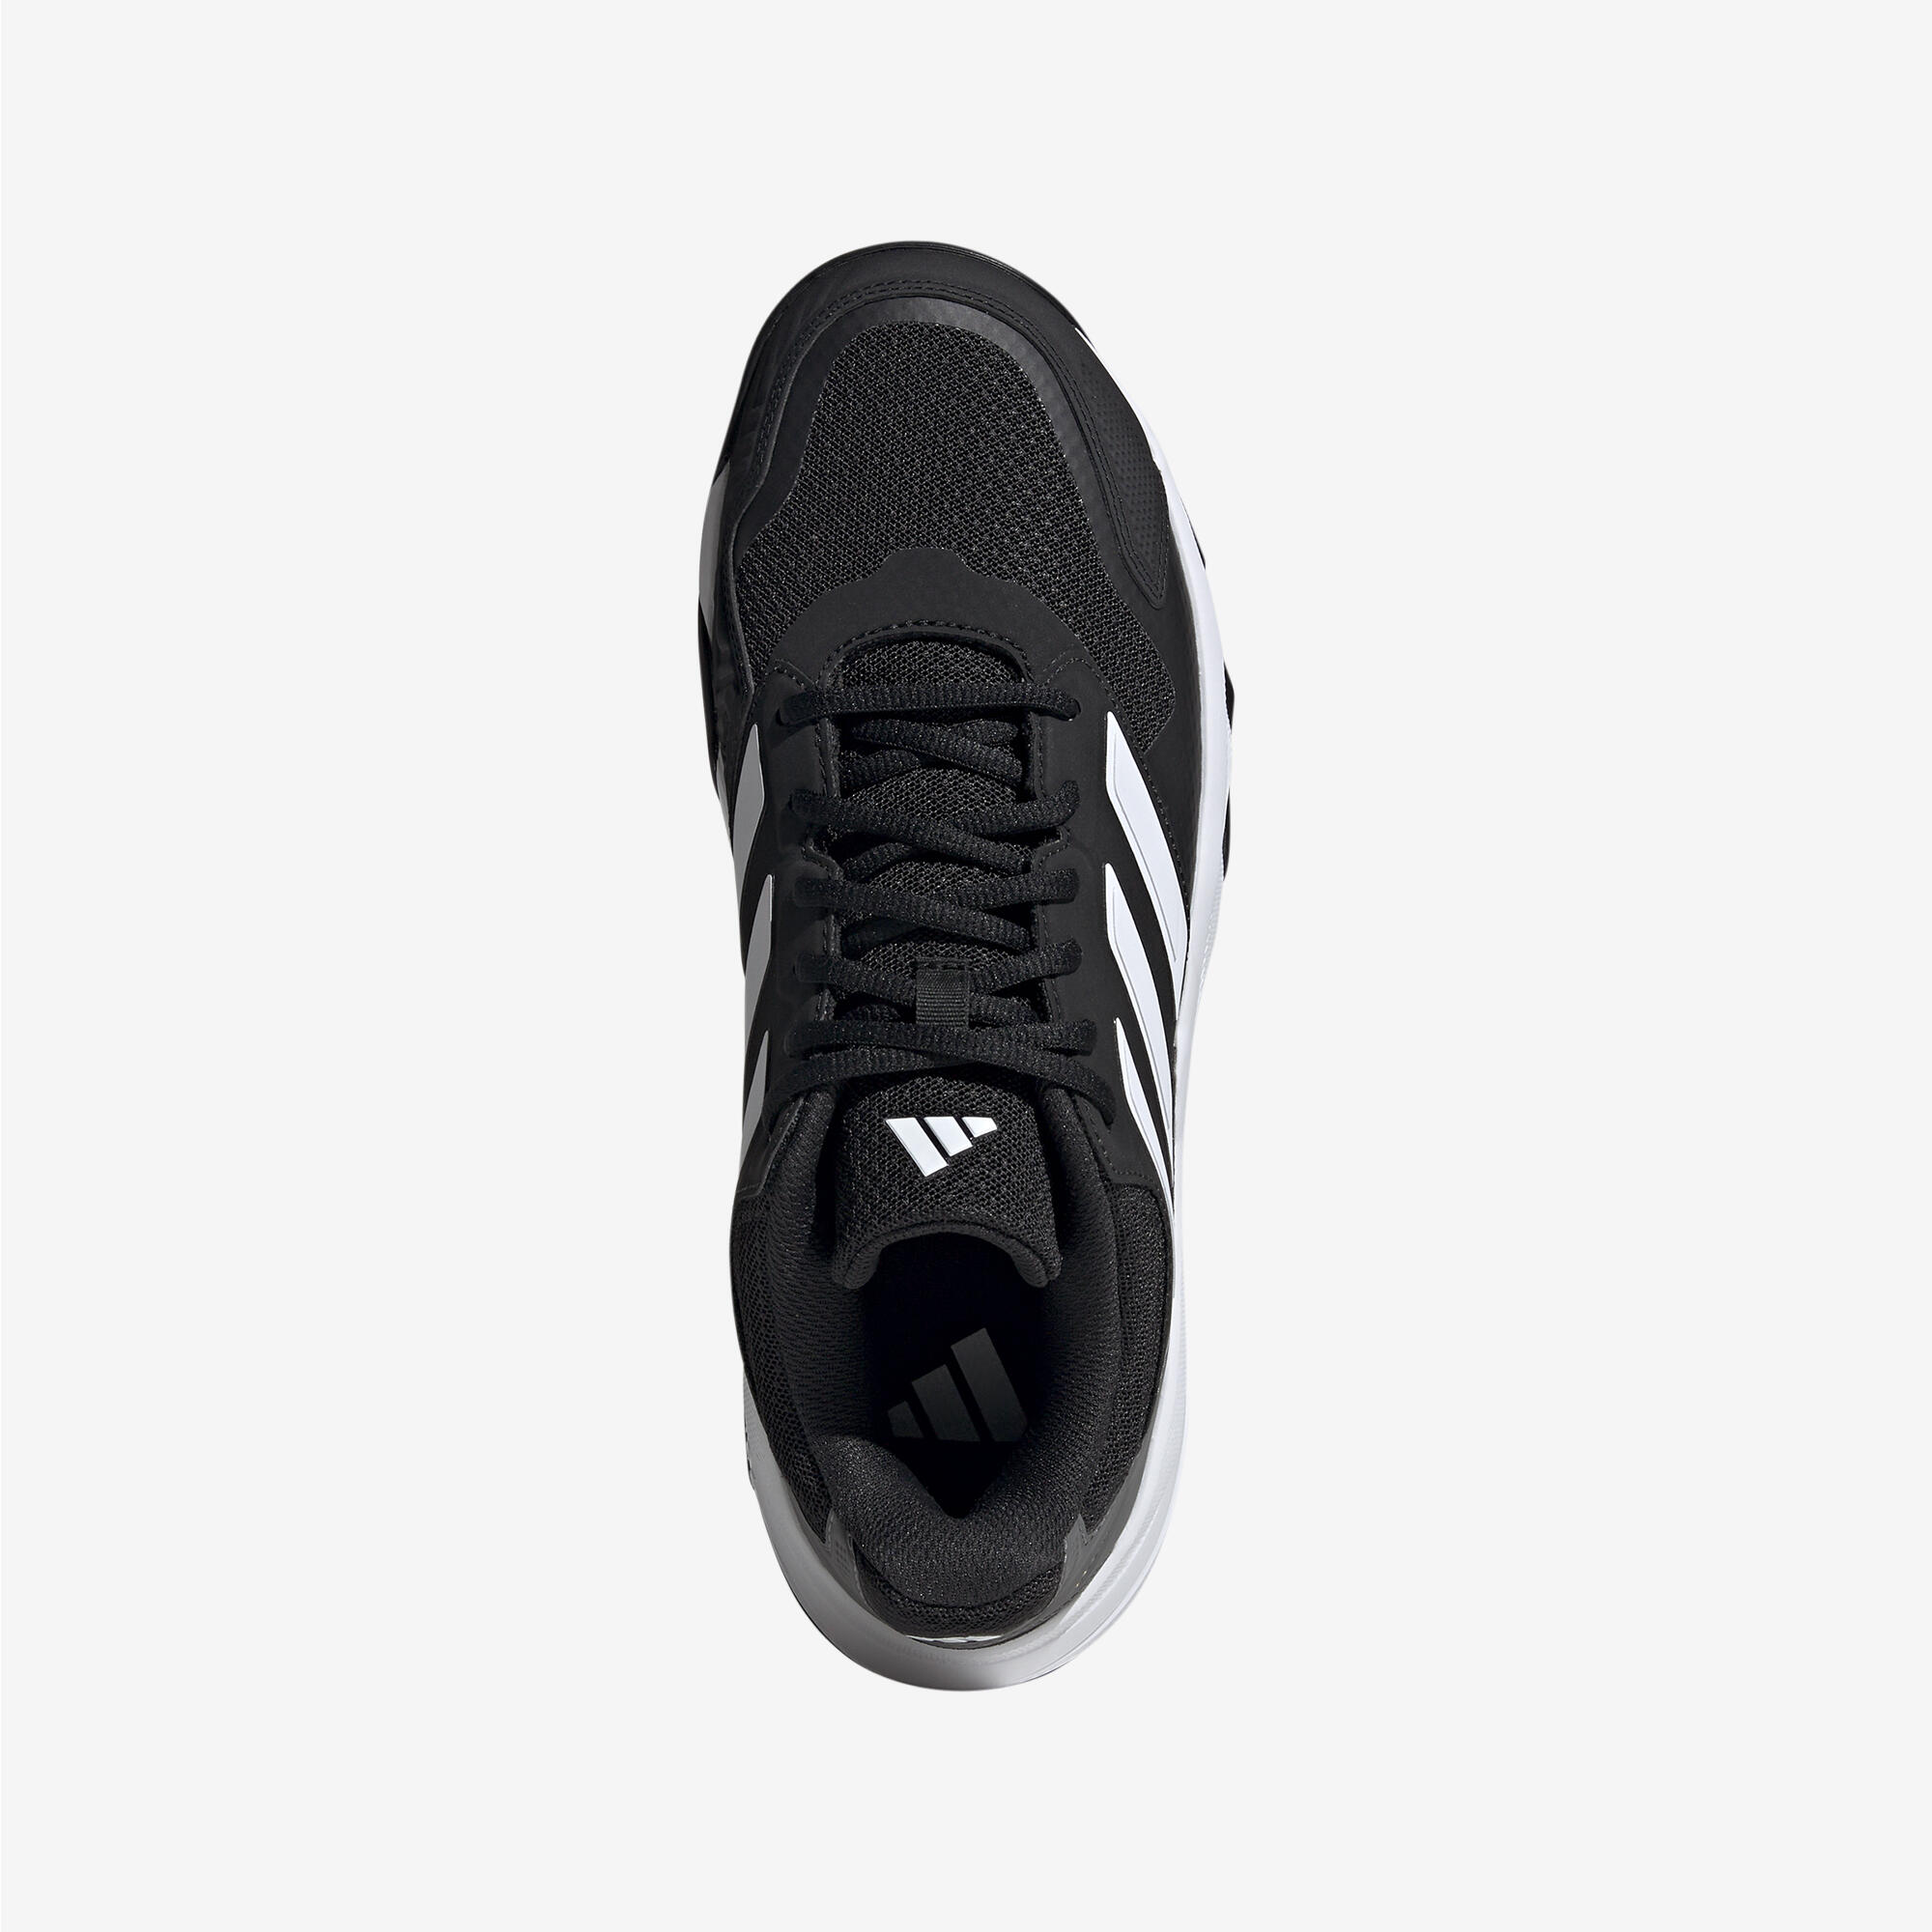 Men's Clay Court Tennis Shoes CourtJam Control - Black/White 7/7